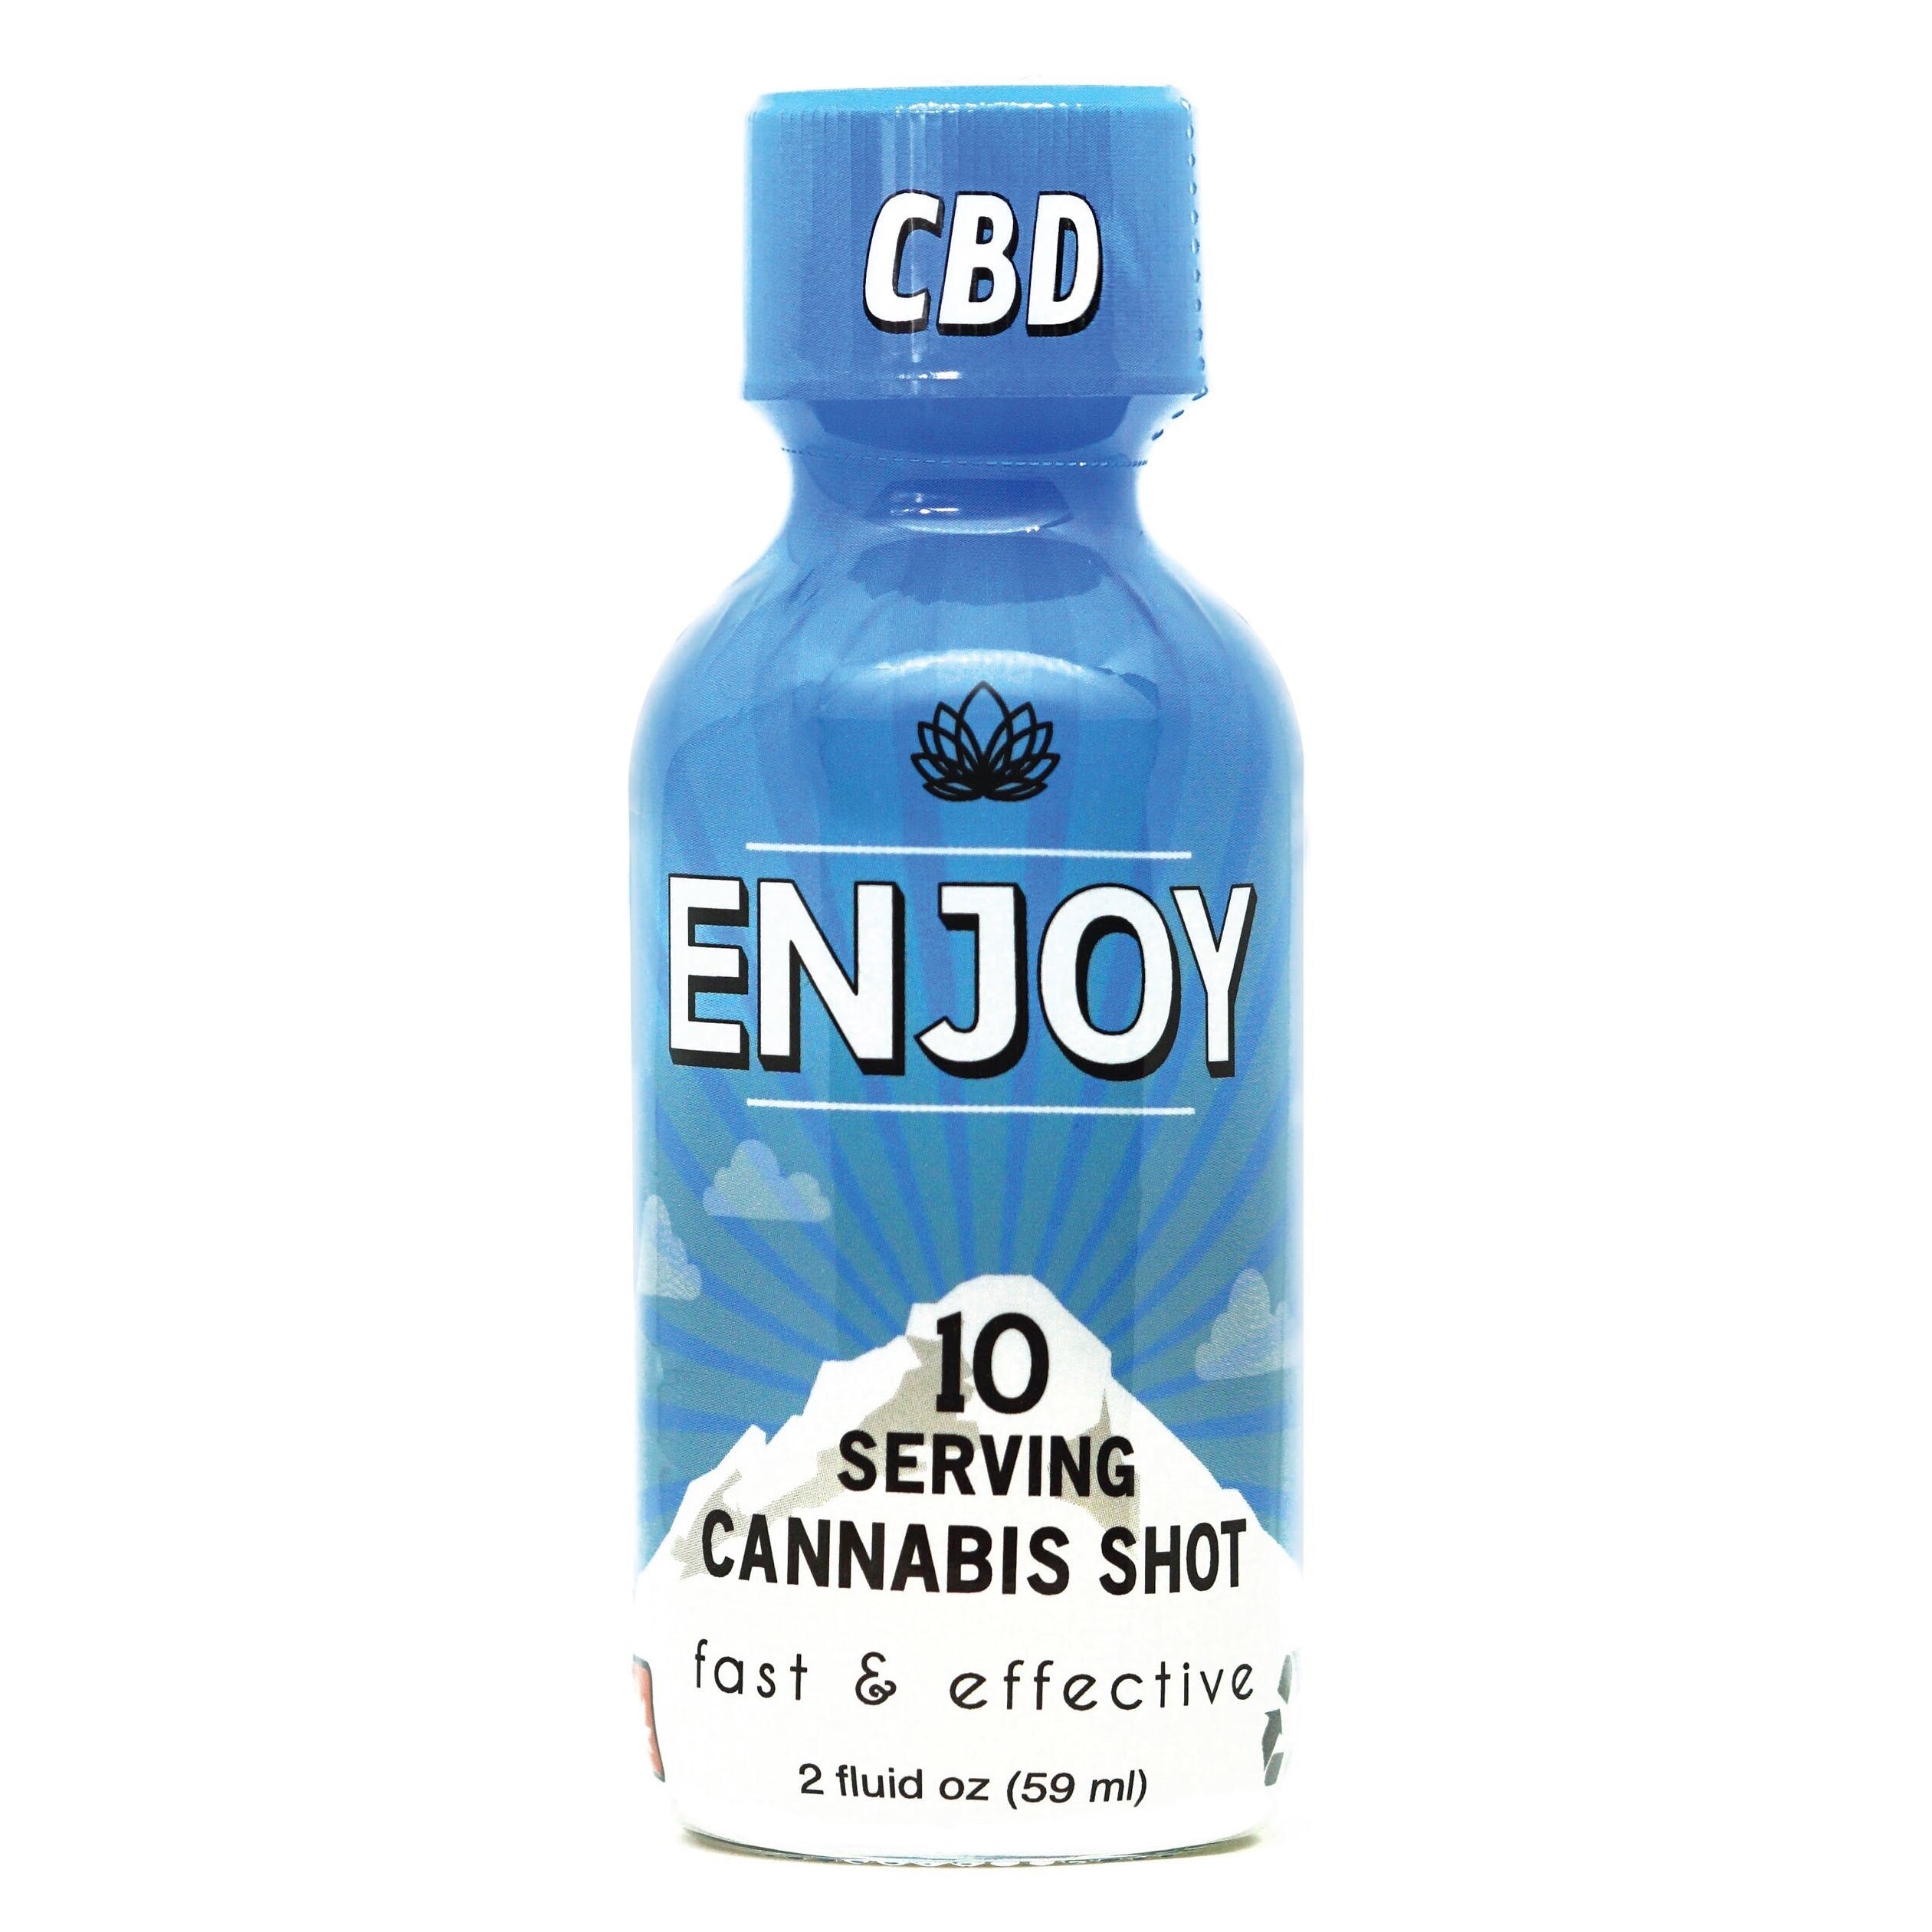 Enjoy - CBD Berry Cannabis Shot